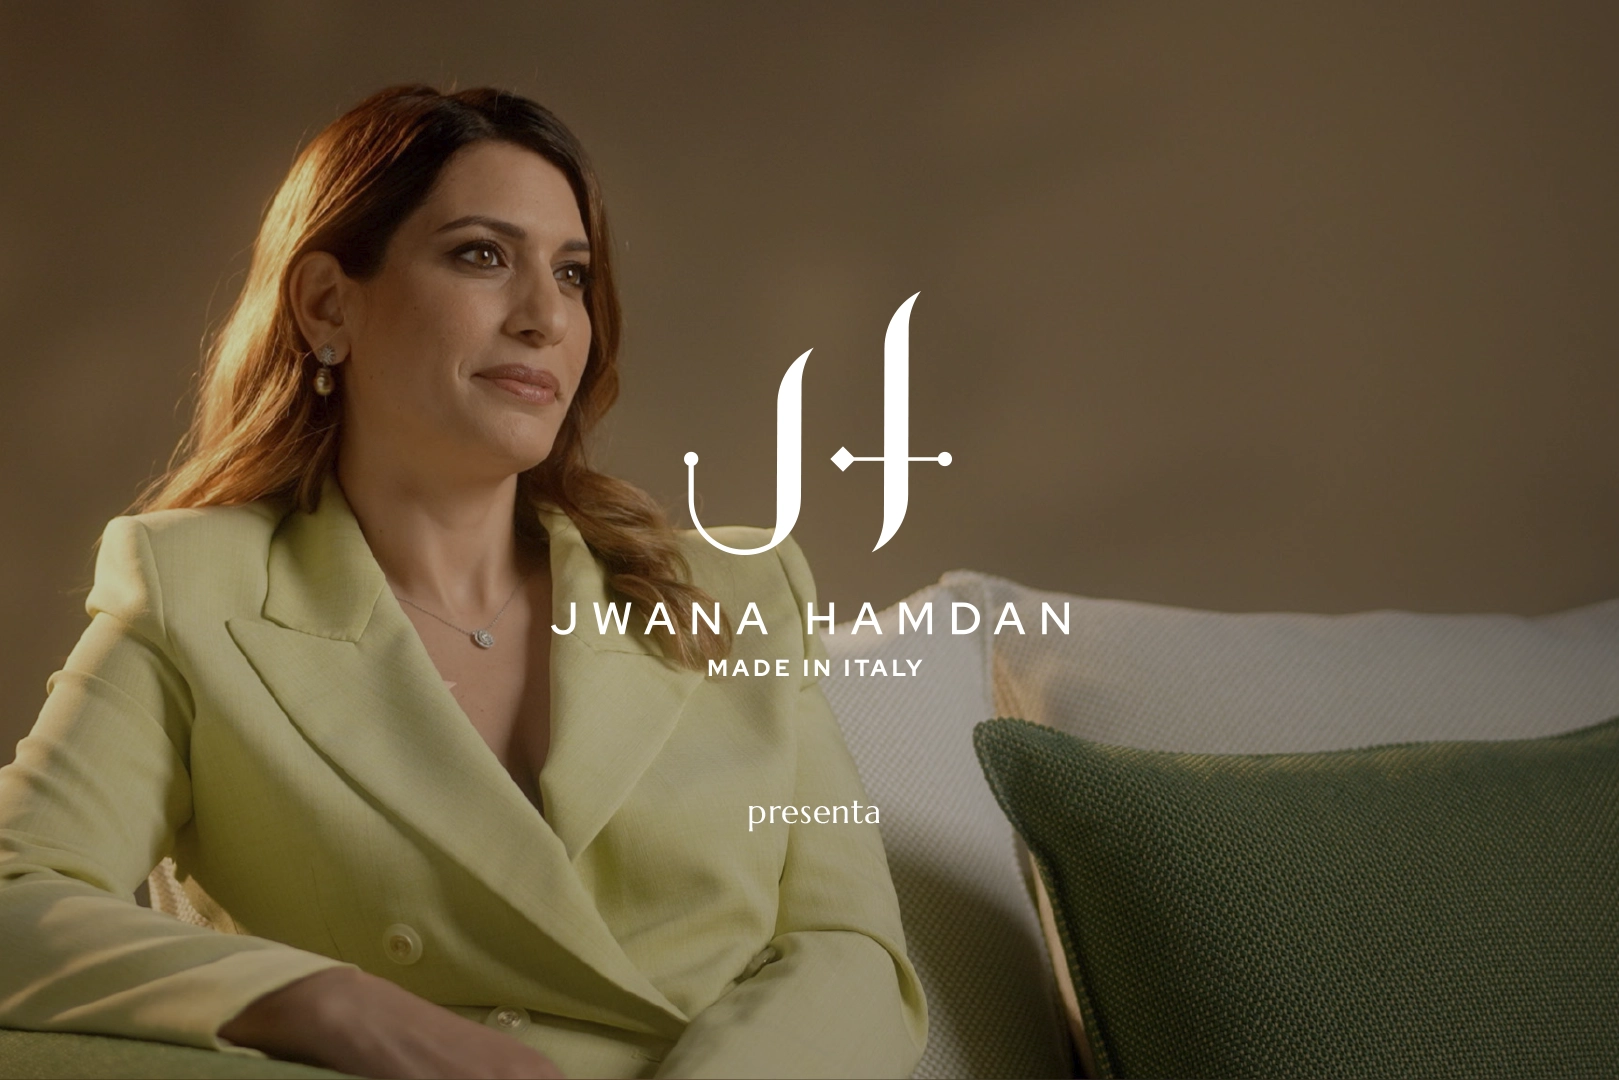 Jwana Hamdan interview